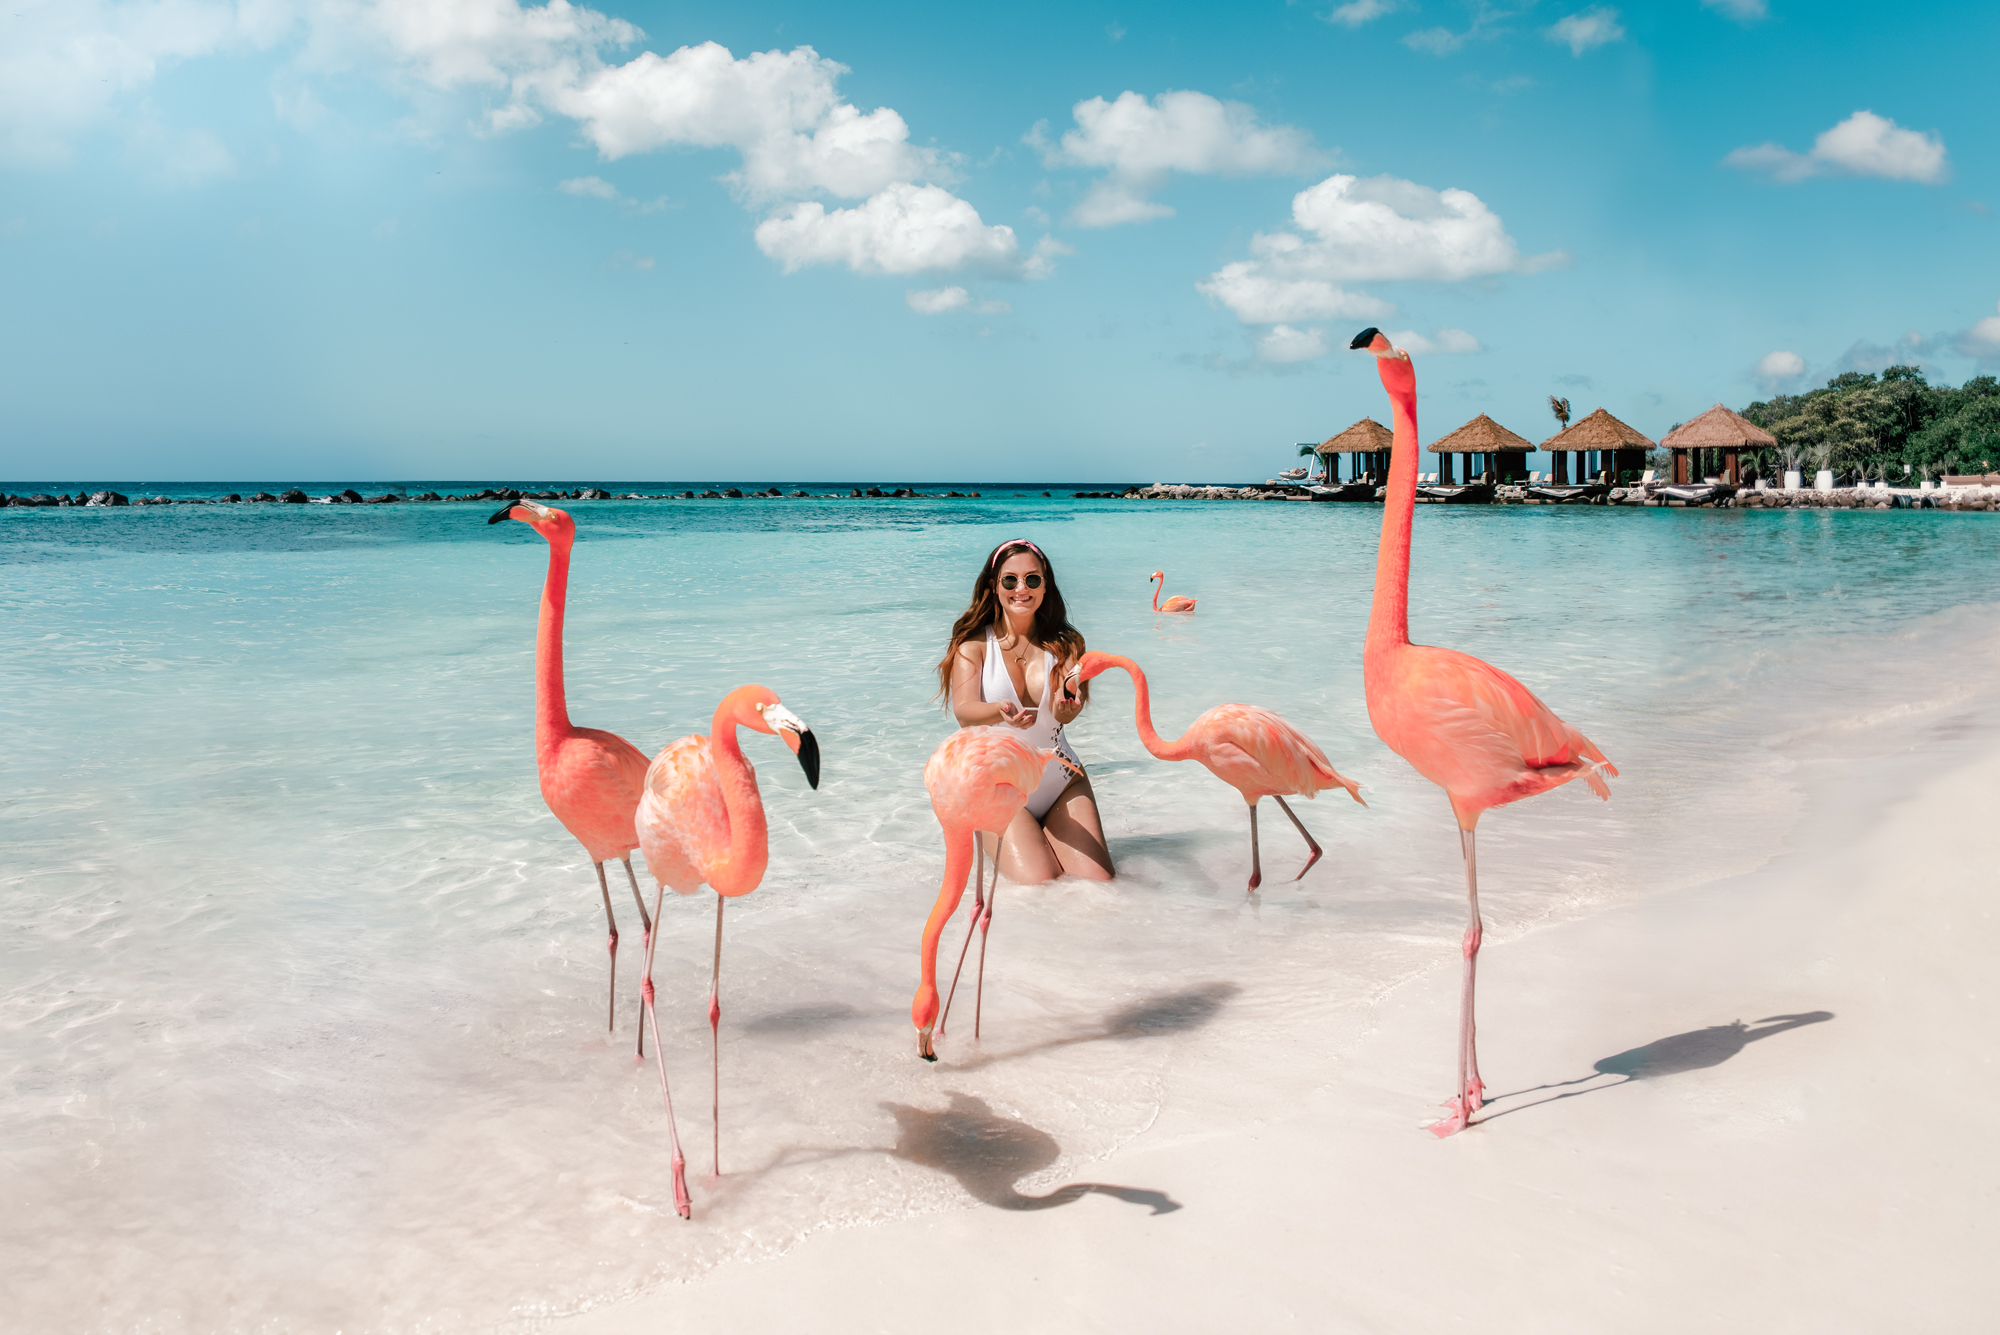 The Ultimate Aruba Travel Guide • ADARAS Blogazine